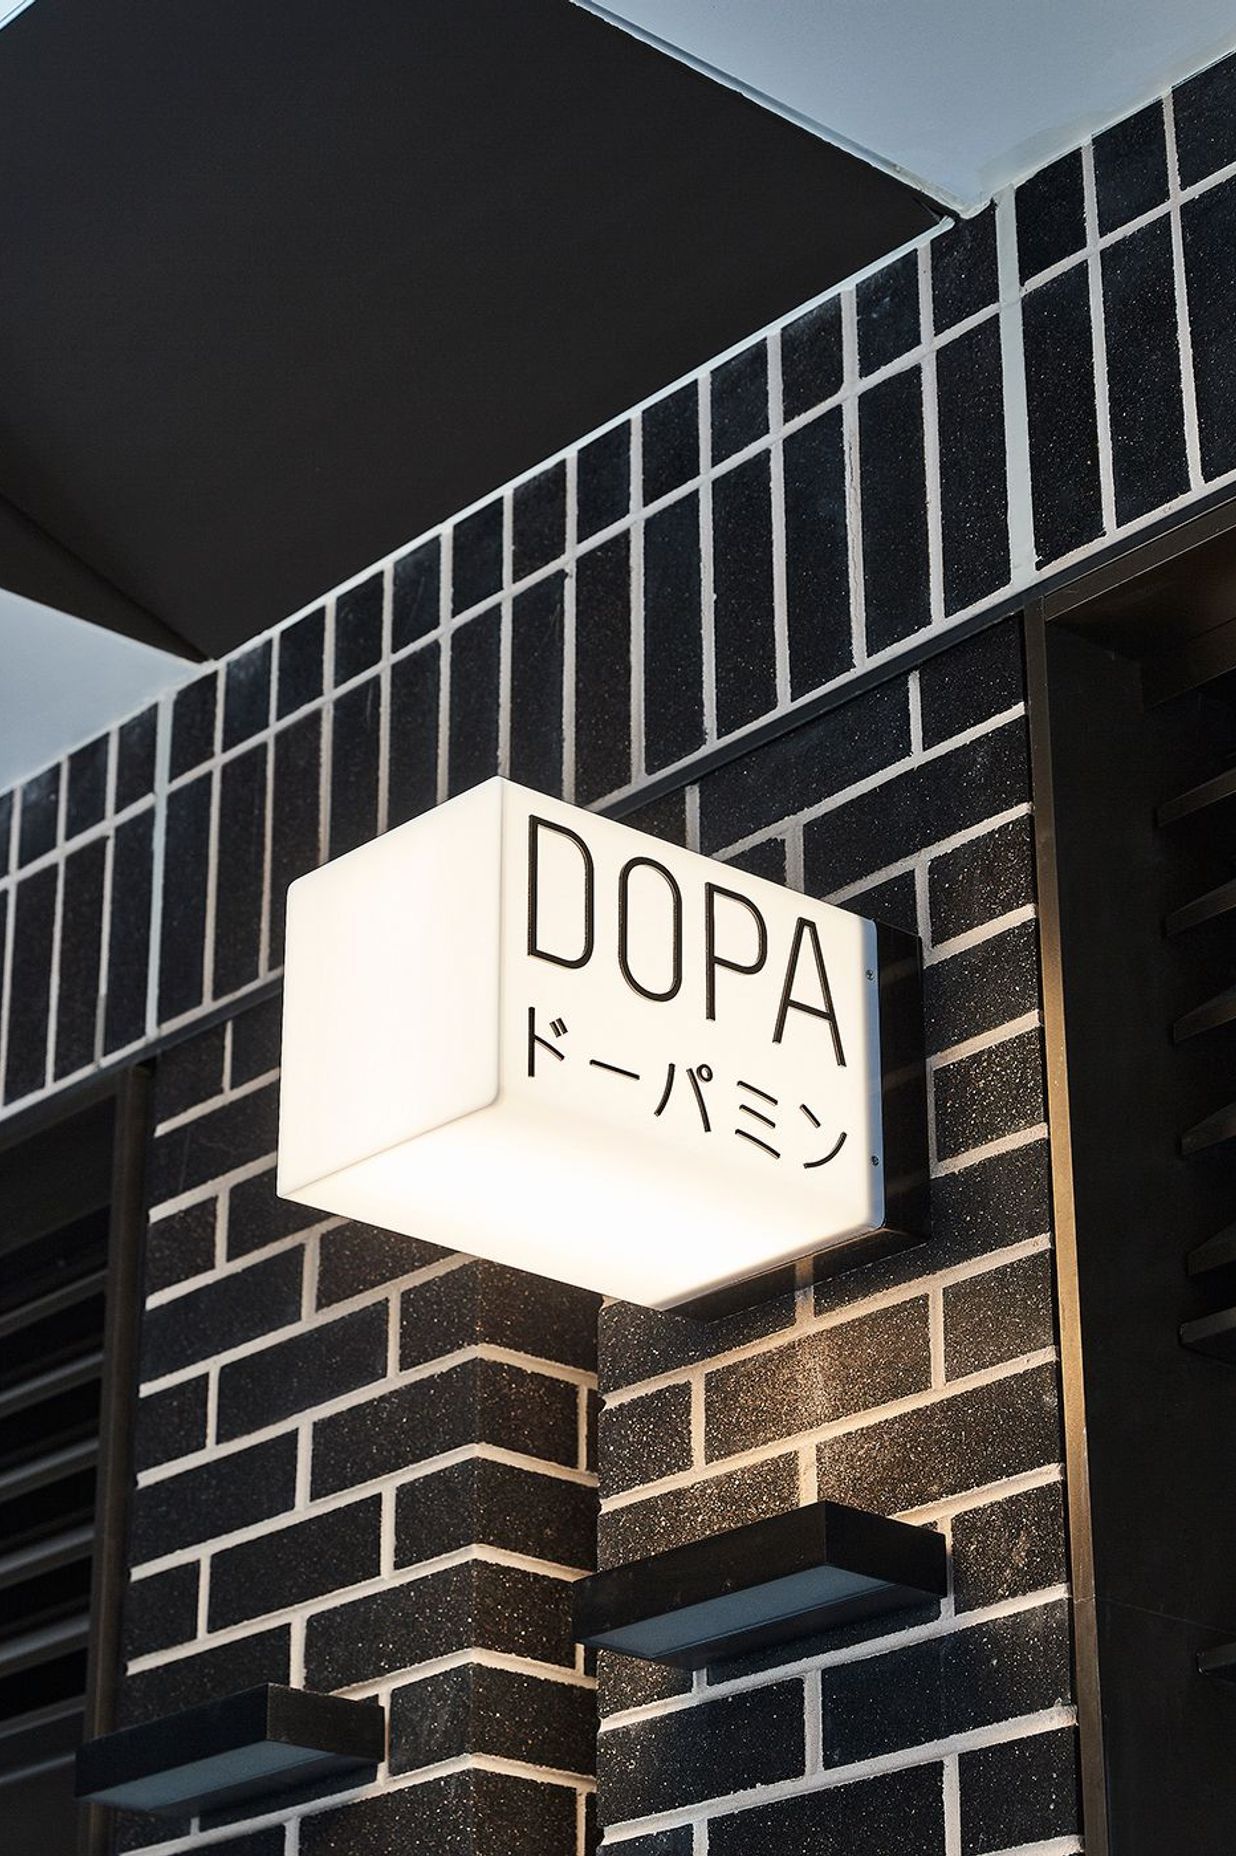 Dopa by Devon